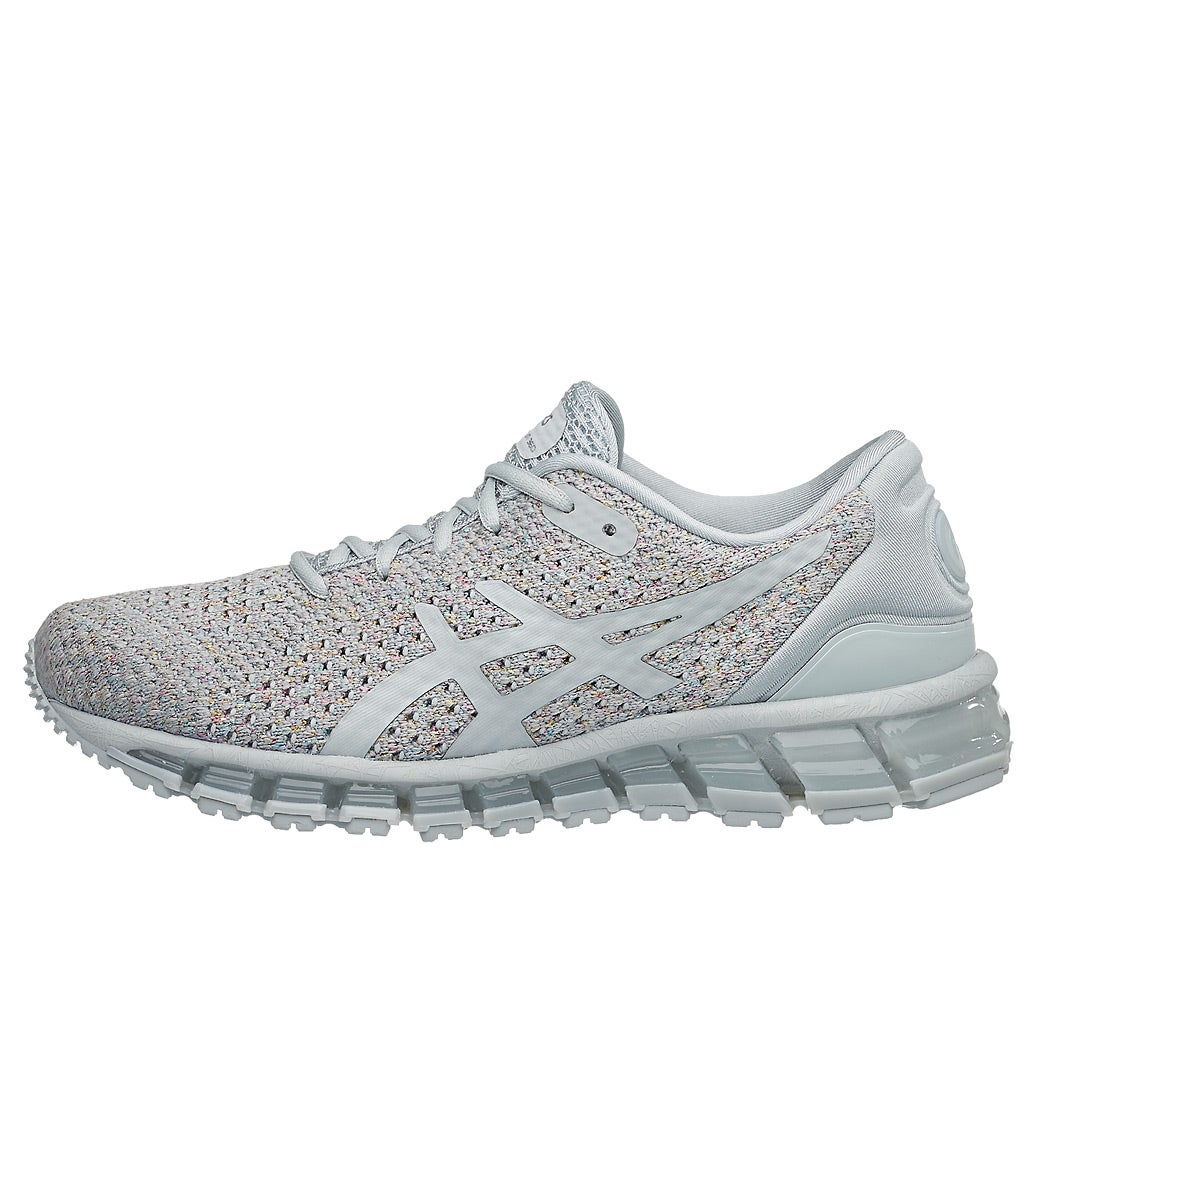 ASICS Gel Quantum 360 Knit 2 Women's Shoes Mid Grey 360° View | Running ...